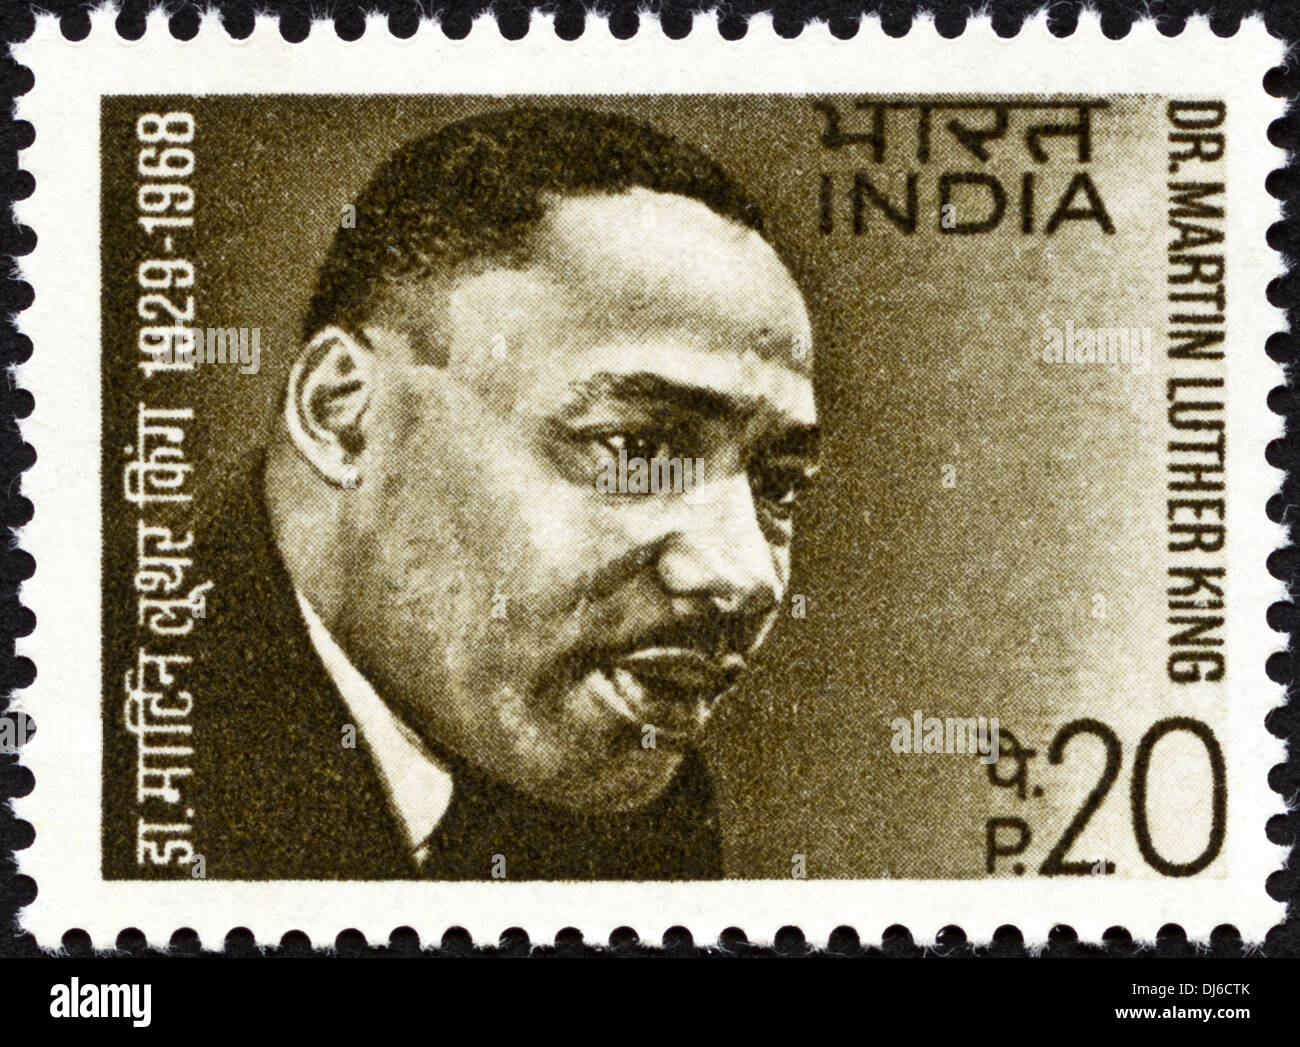 Timbre-poste Inde Le Dr Martin Luther King 1929 - 1968 en date du 1969 Banque D'Images